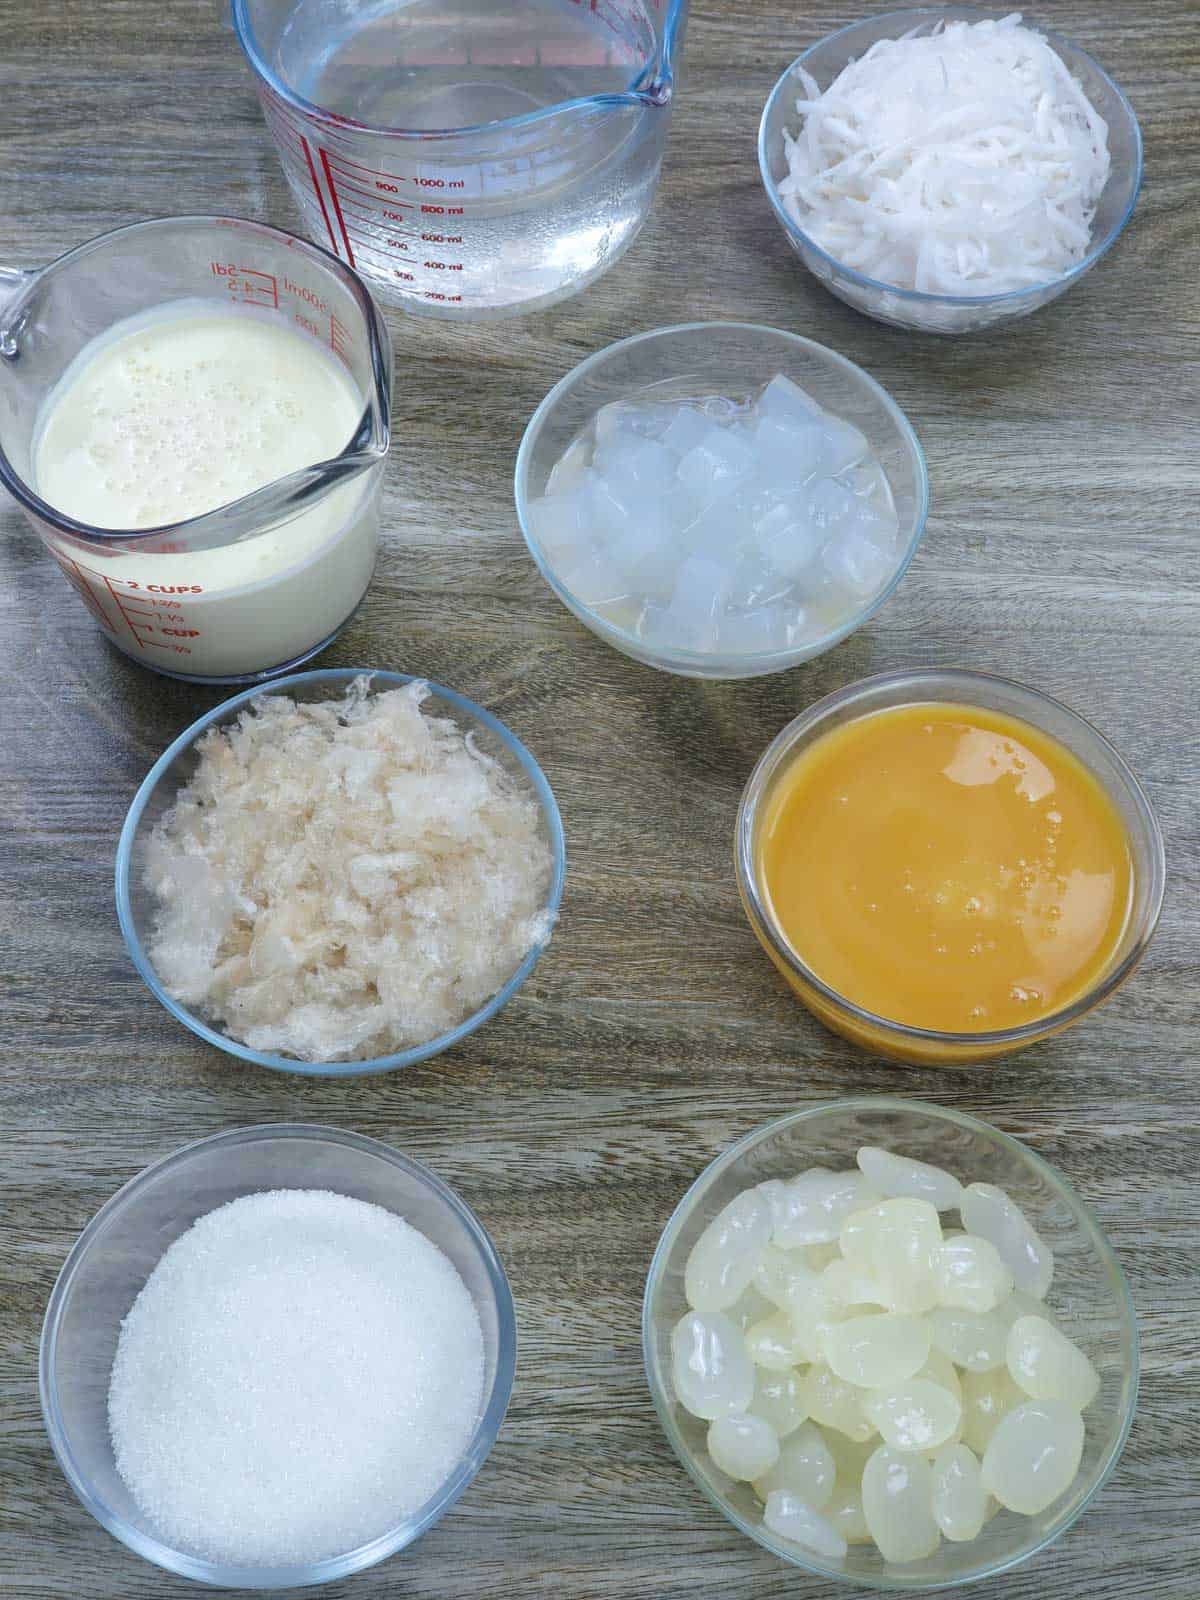 condensed milk, agar agar, kaong, nata de coco, shredded young coconut, Nestle cream in bowls